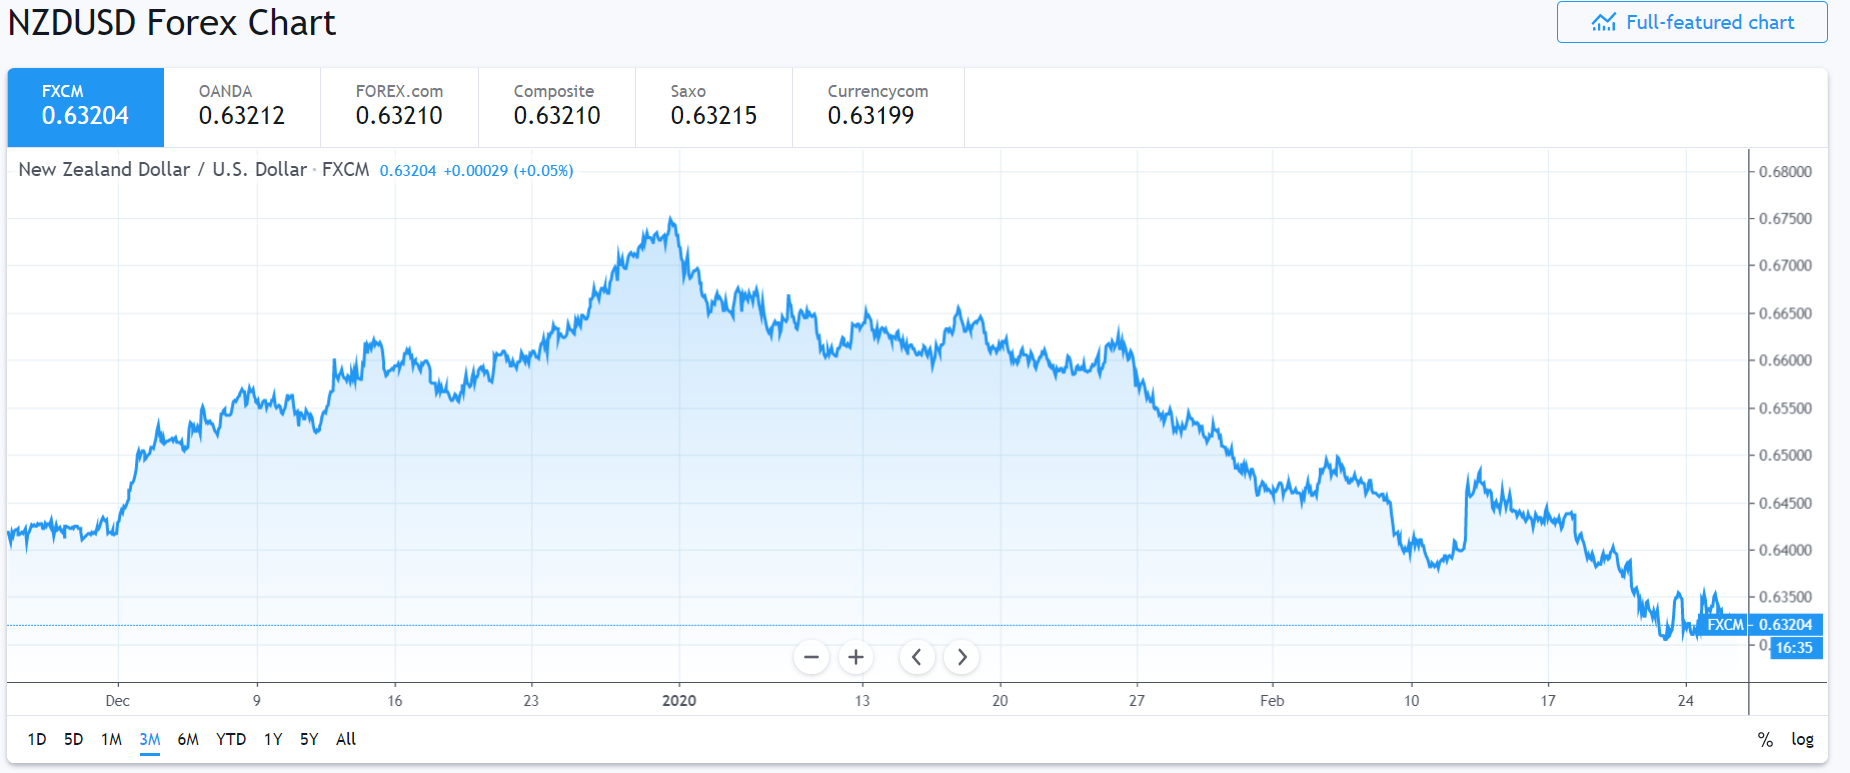 FXCM - Trading View NZD USD Chart - 26 Feb 2020